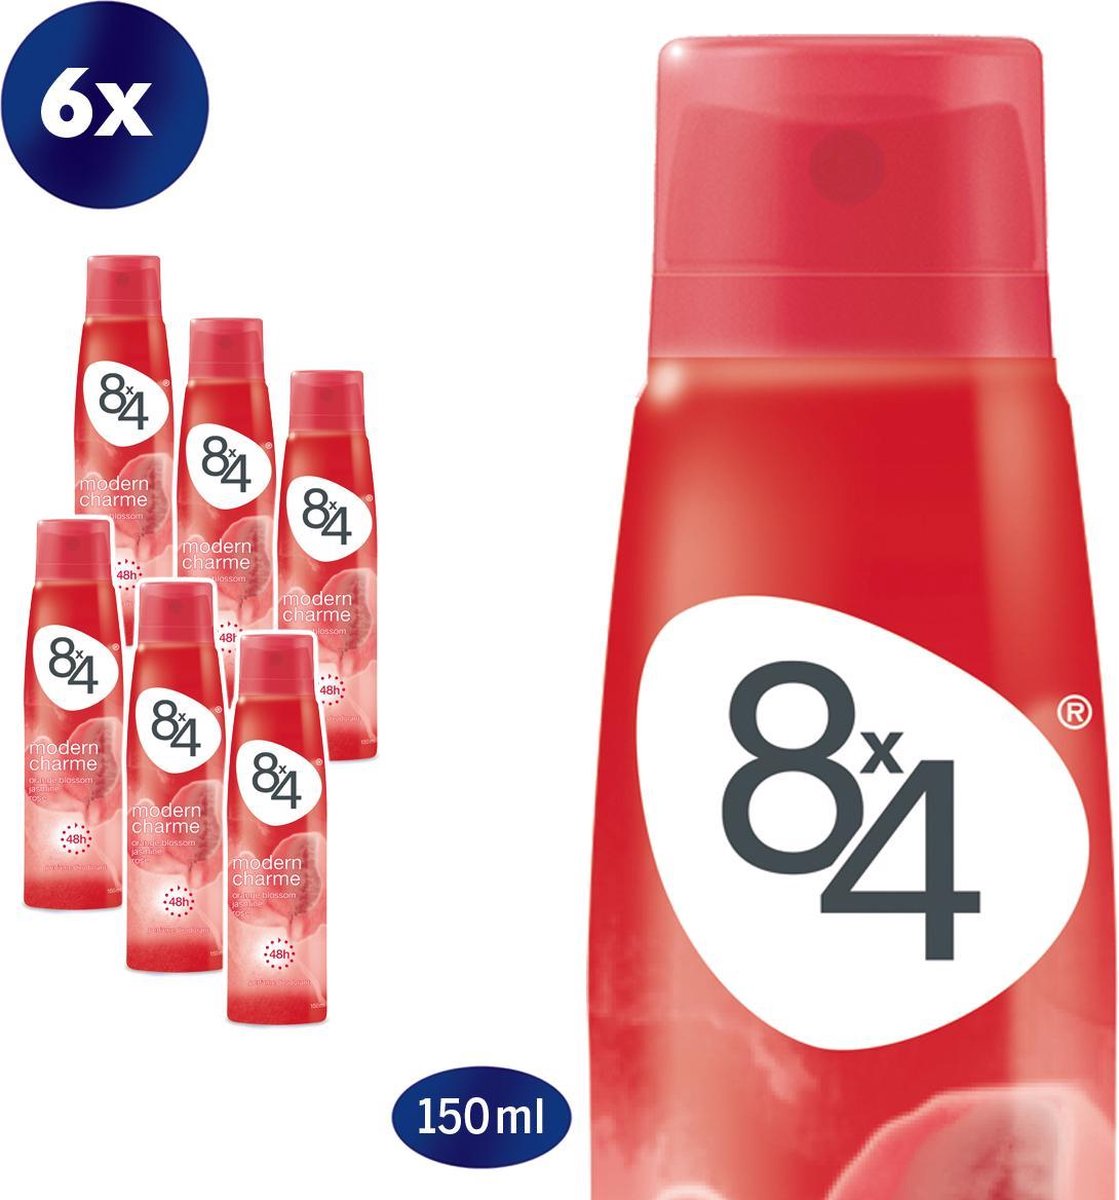 8x4 Modern Charme Deodorant Spray- 6 x 150 ml - Voordeelverpakking | bol.com